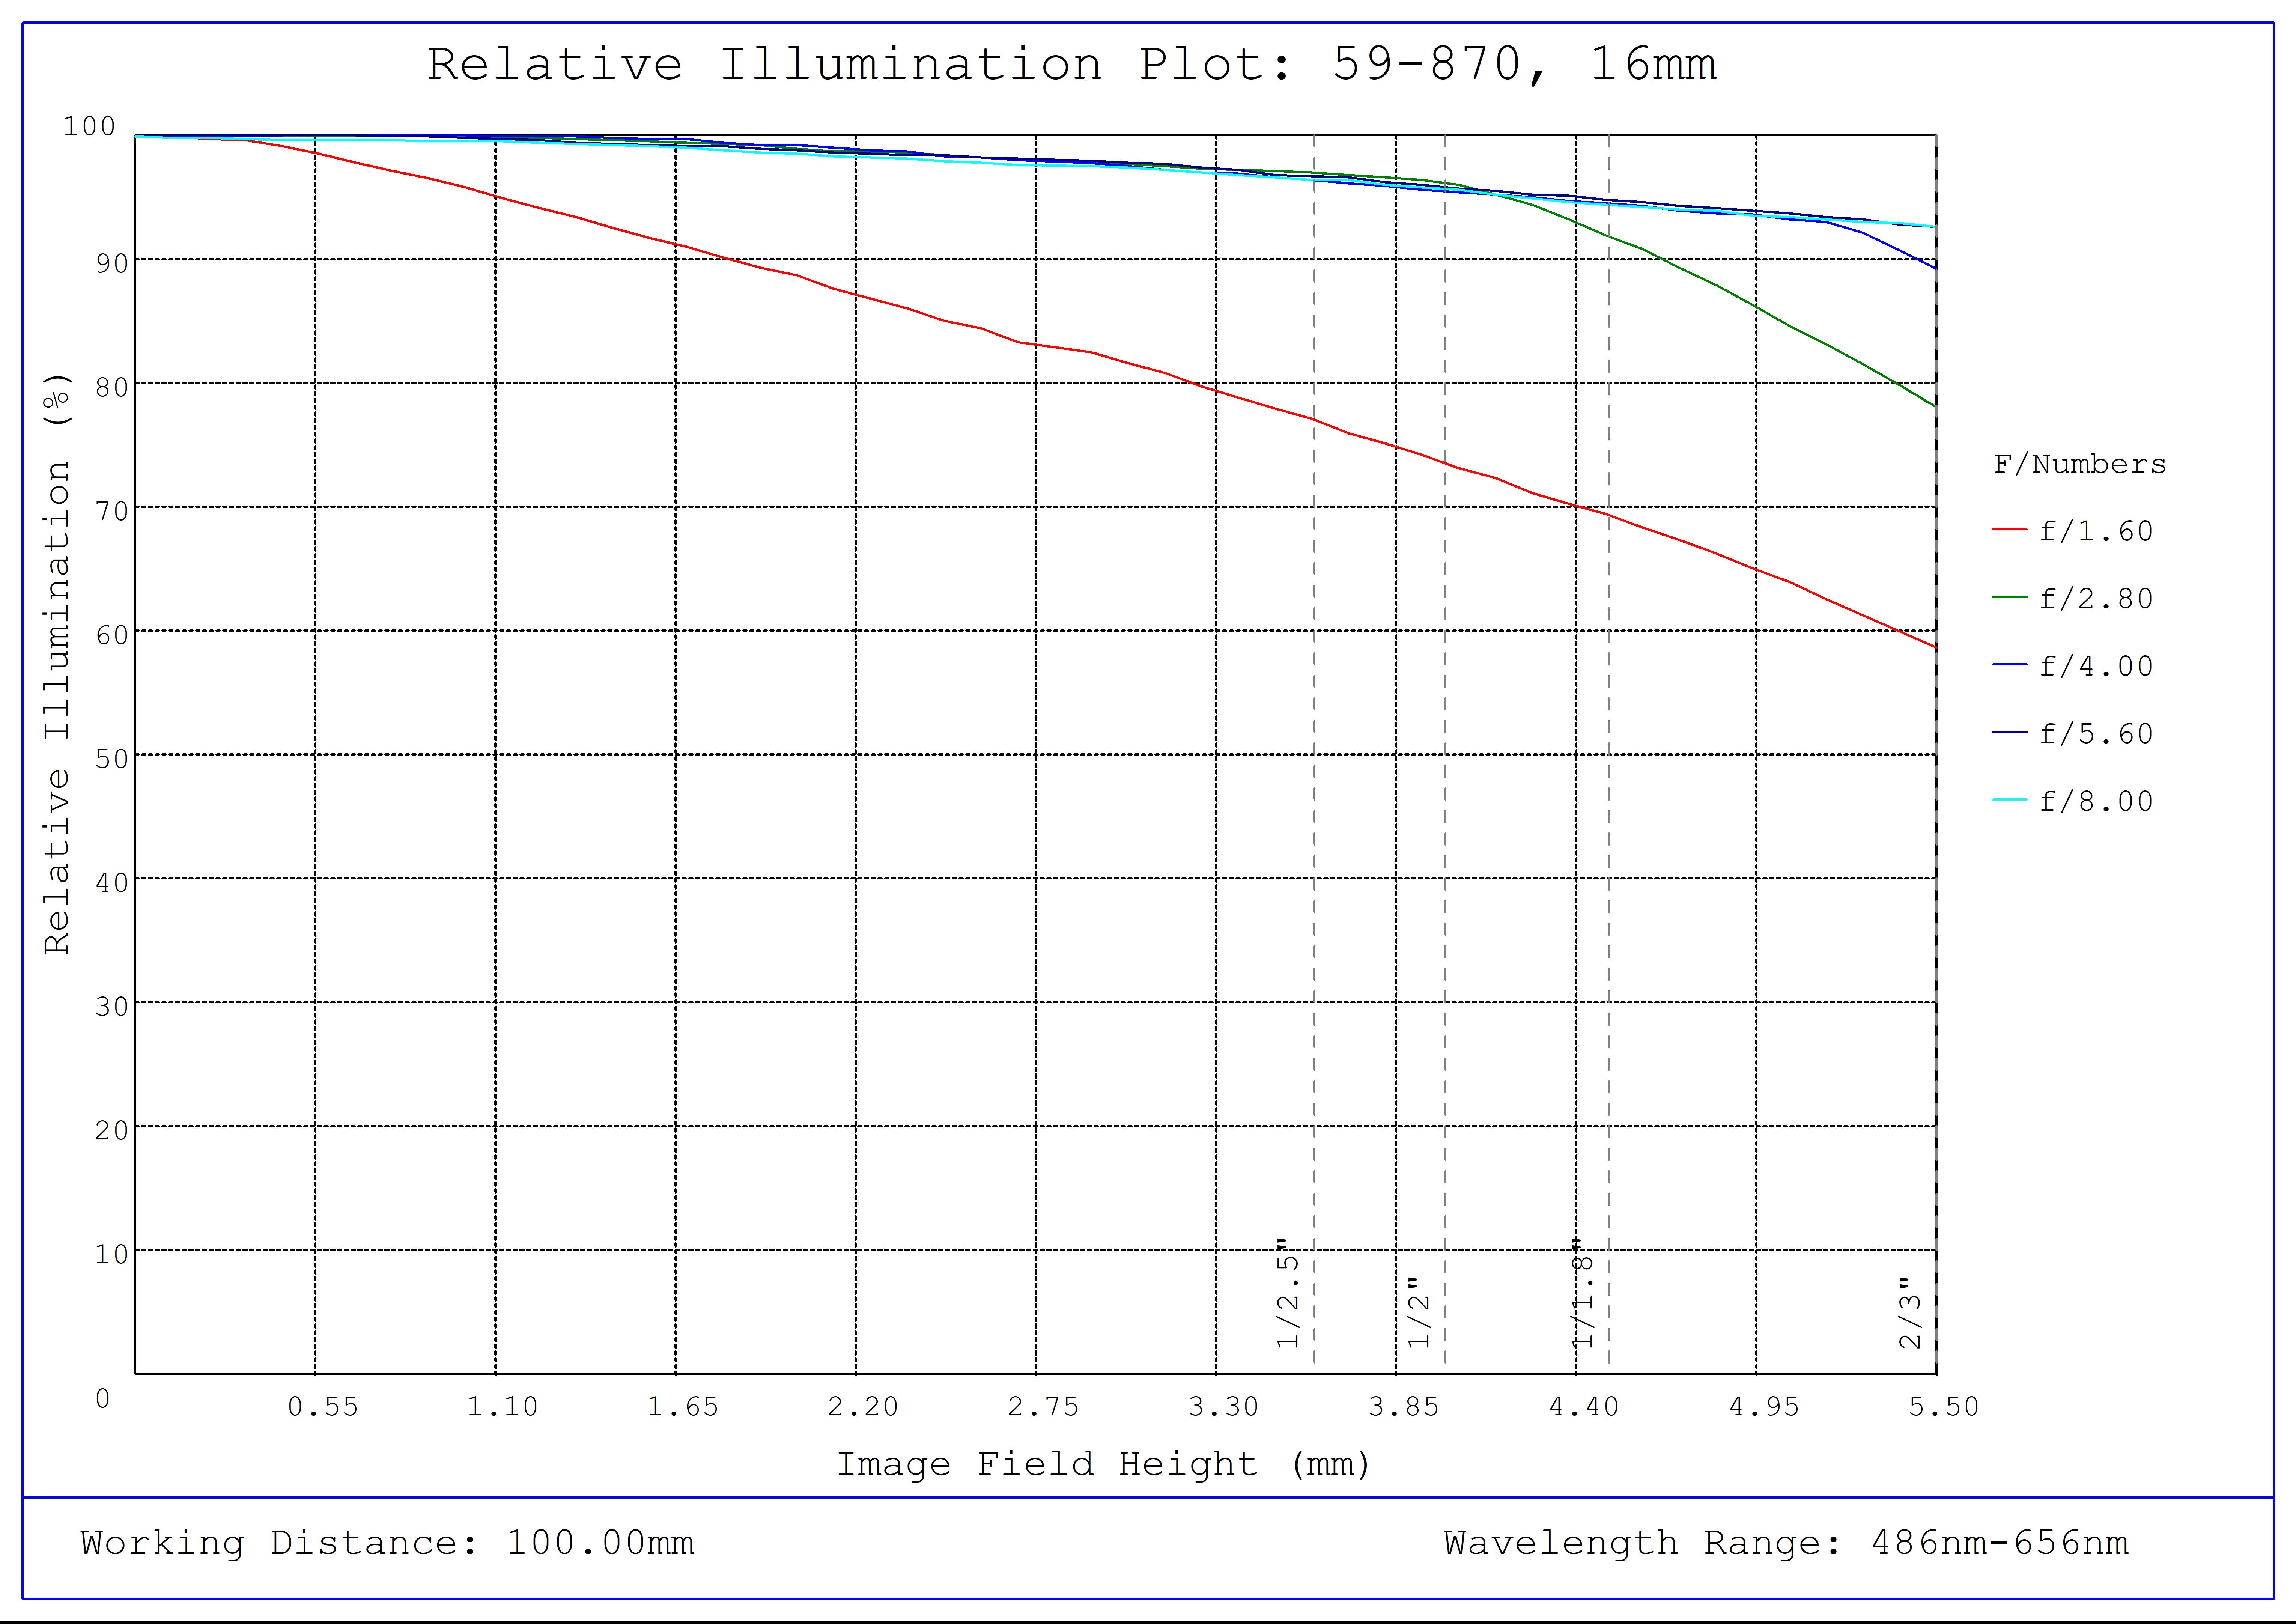 #59-870, 16mm C Series Fixed Focal Length Lens, Relative Illumination Plot